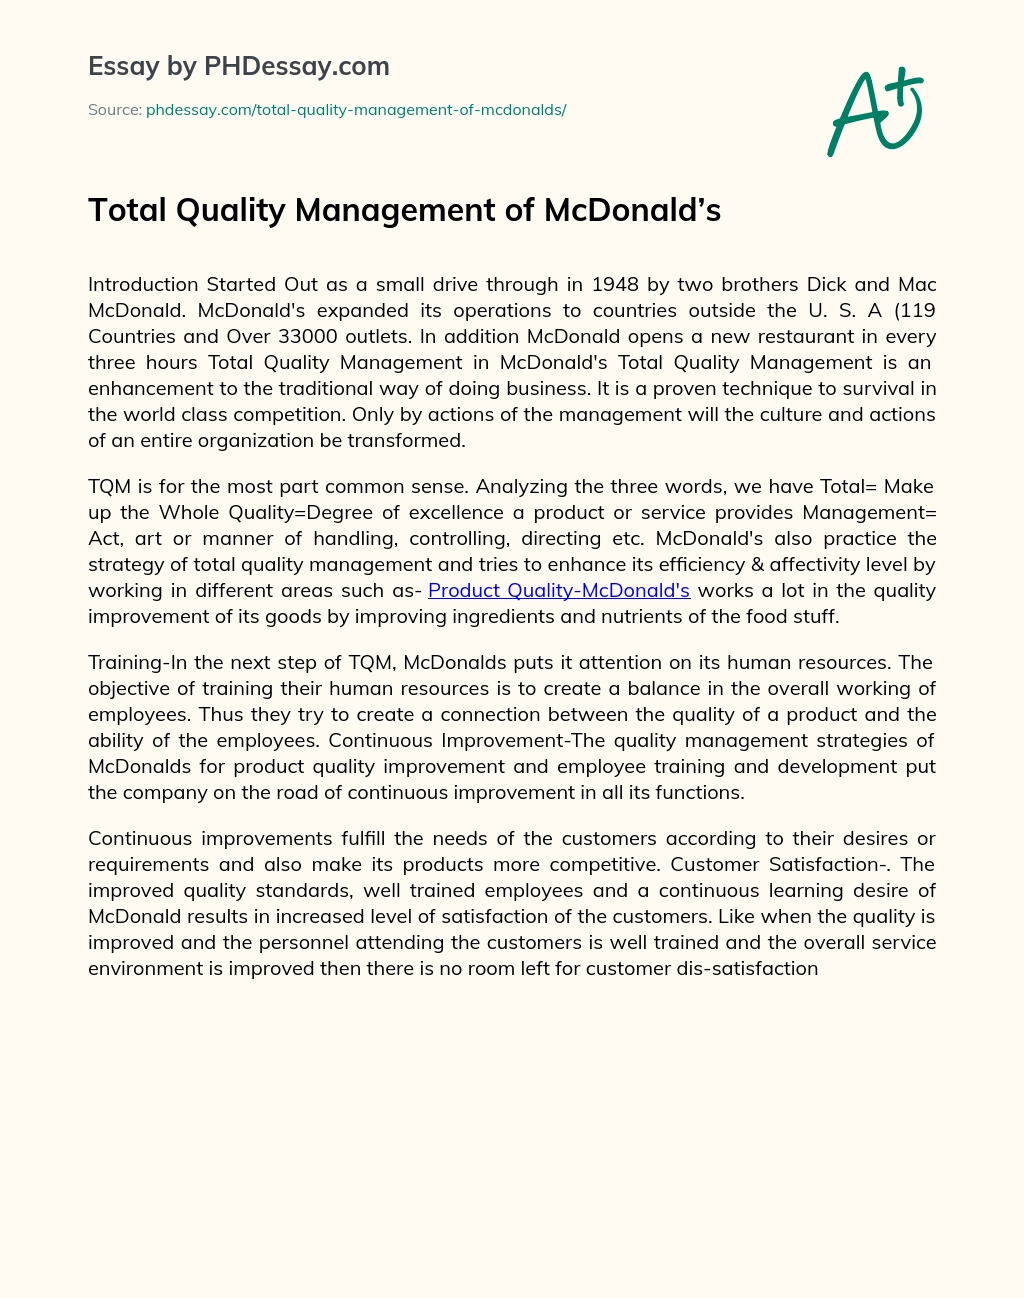 Total Quality Management of McDonald’s essay